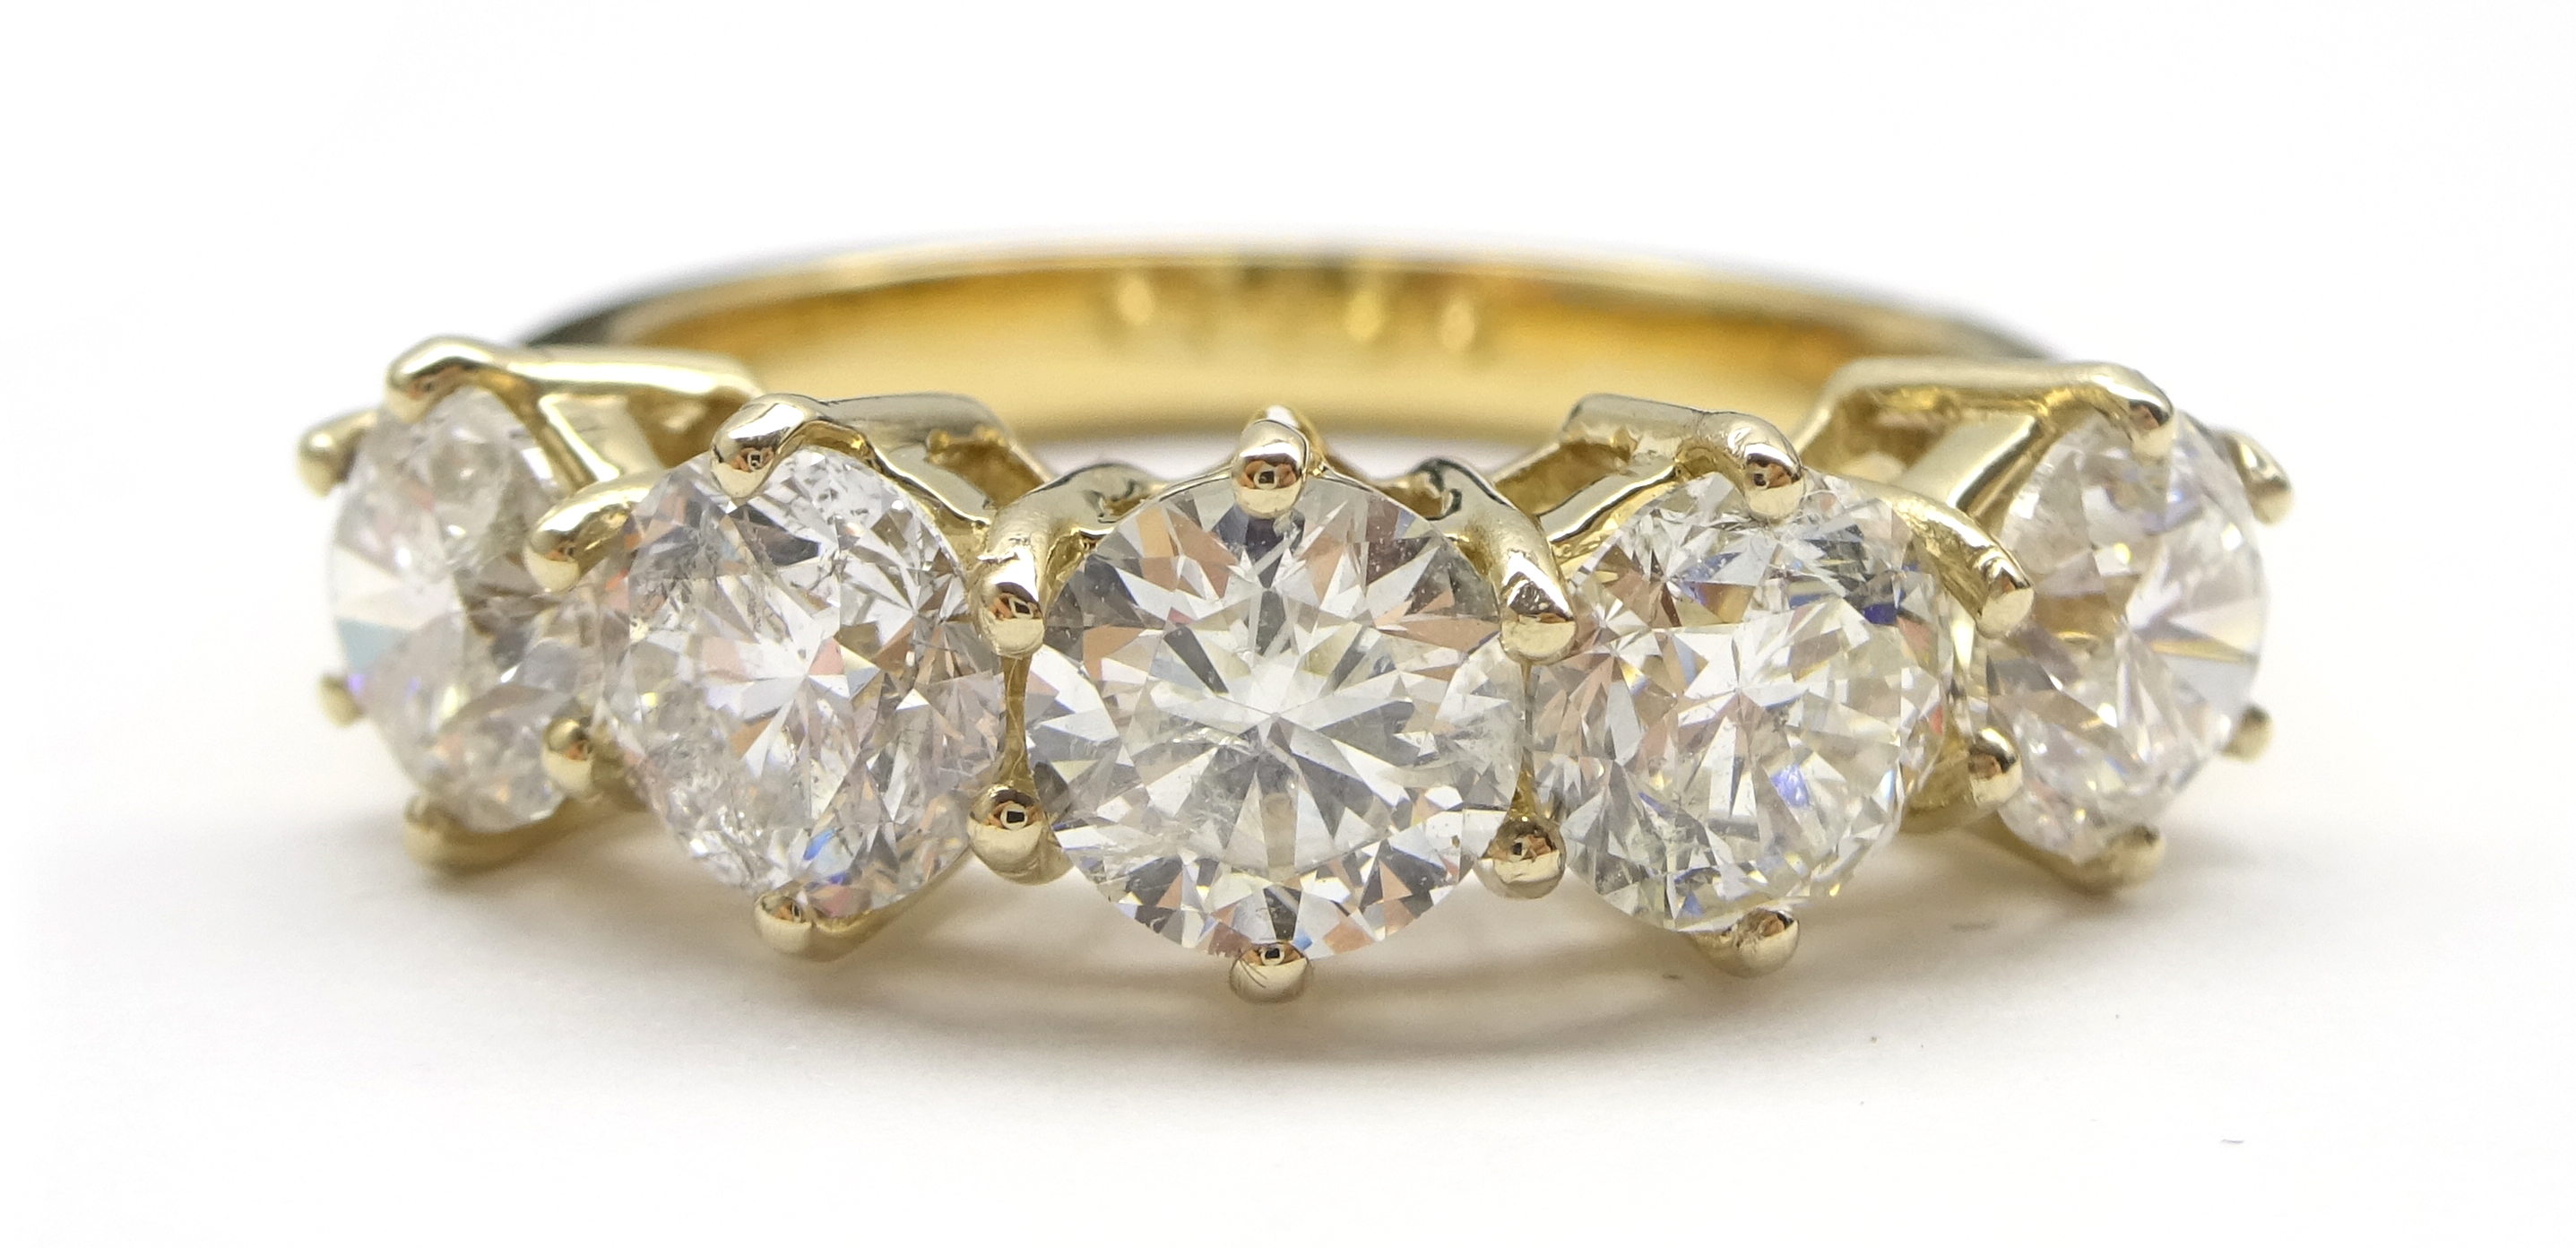 18ct gold five stone round brilliant cut diamond ring hallmarked, total diamond weight 2.